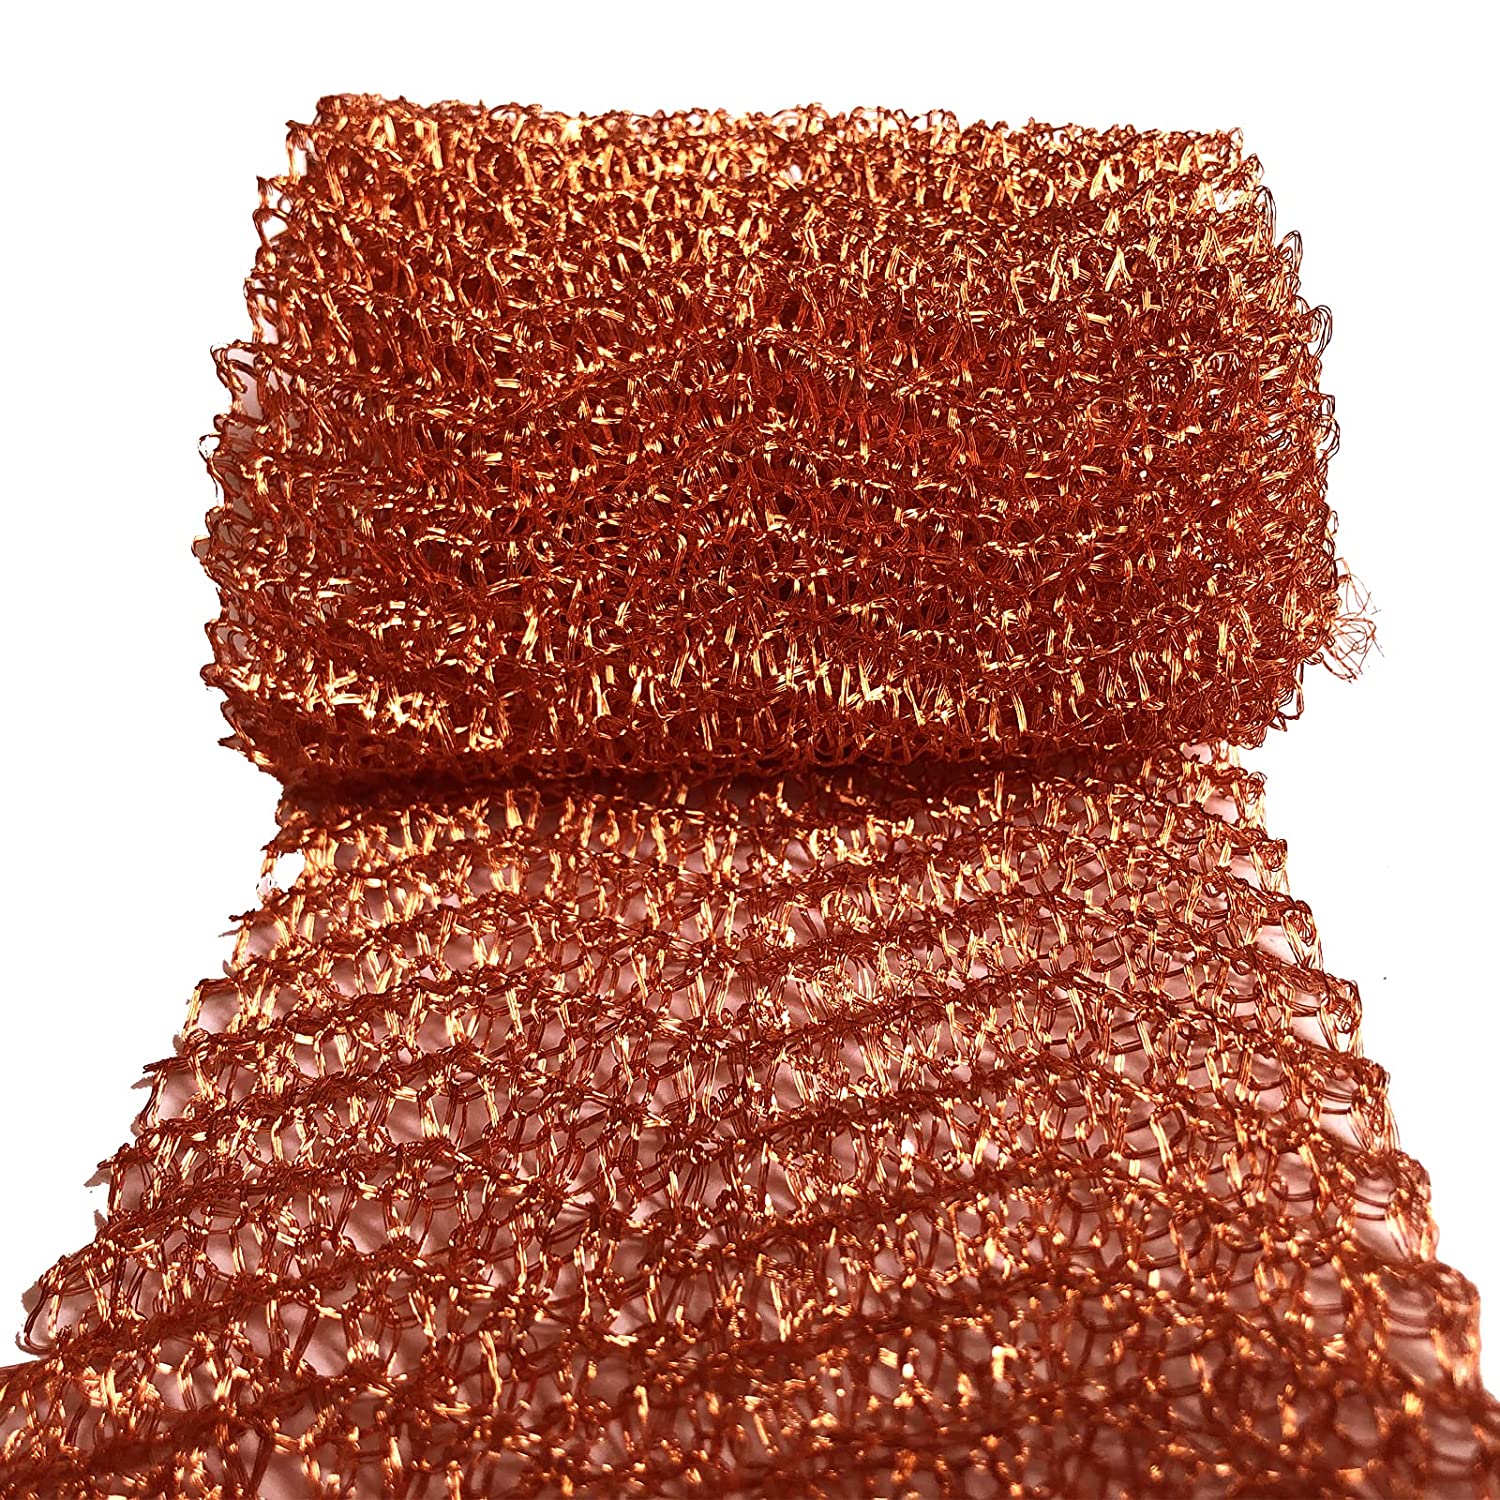 Malla de cobre, a prueba de roedores, tela resistente rellena de obstrucciones de cobre con huecos, evita caracoles, para proteger plantas